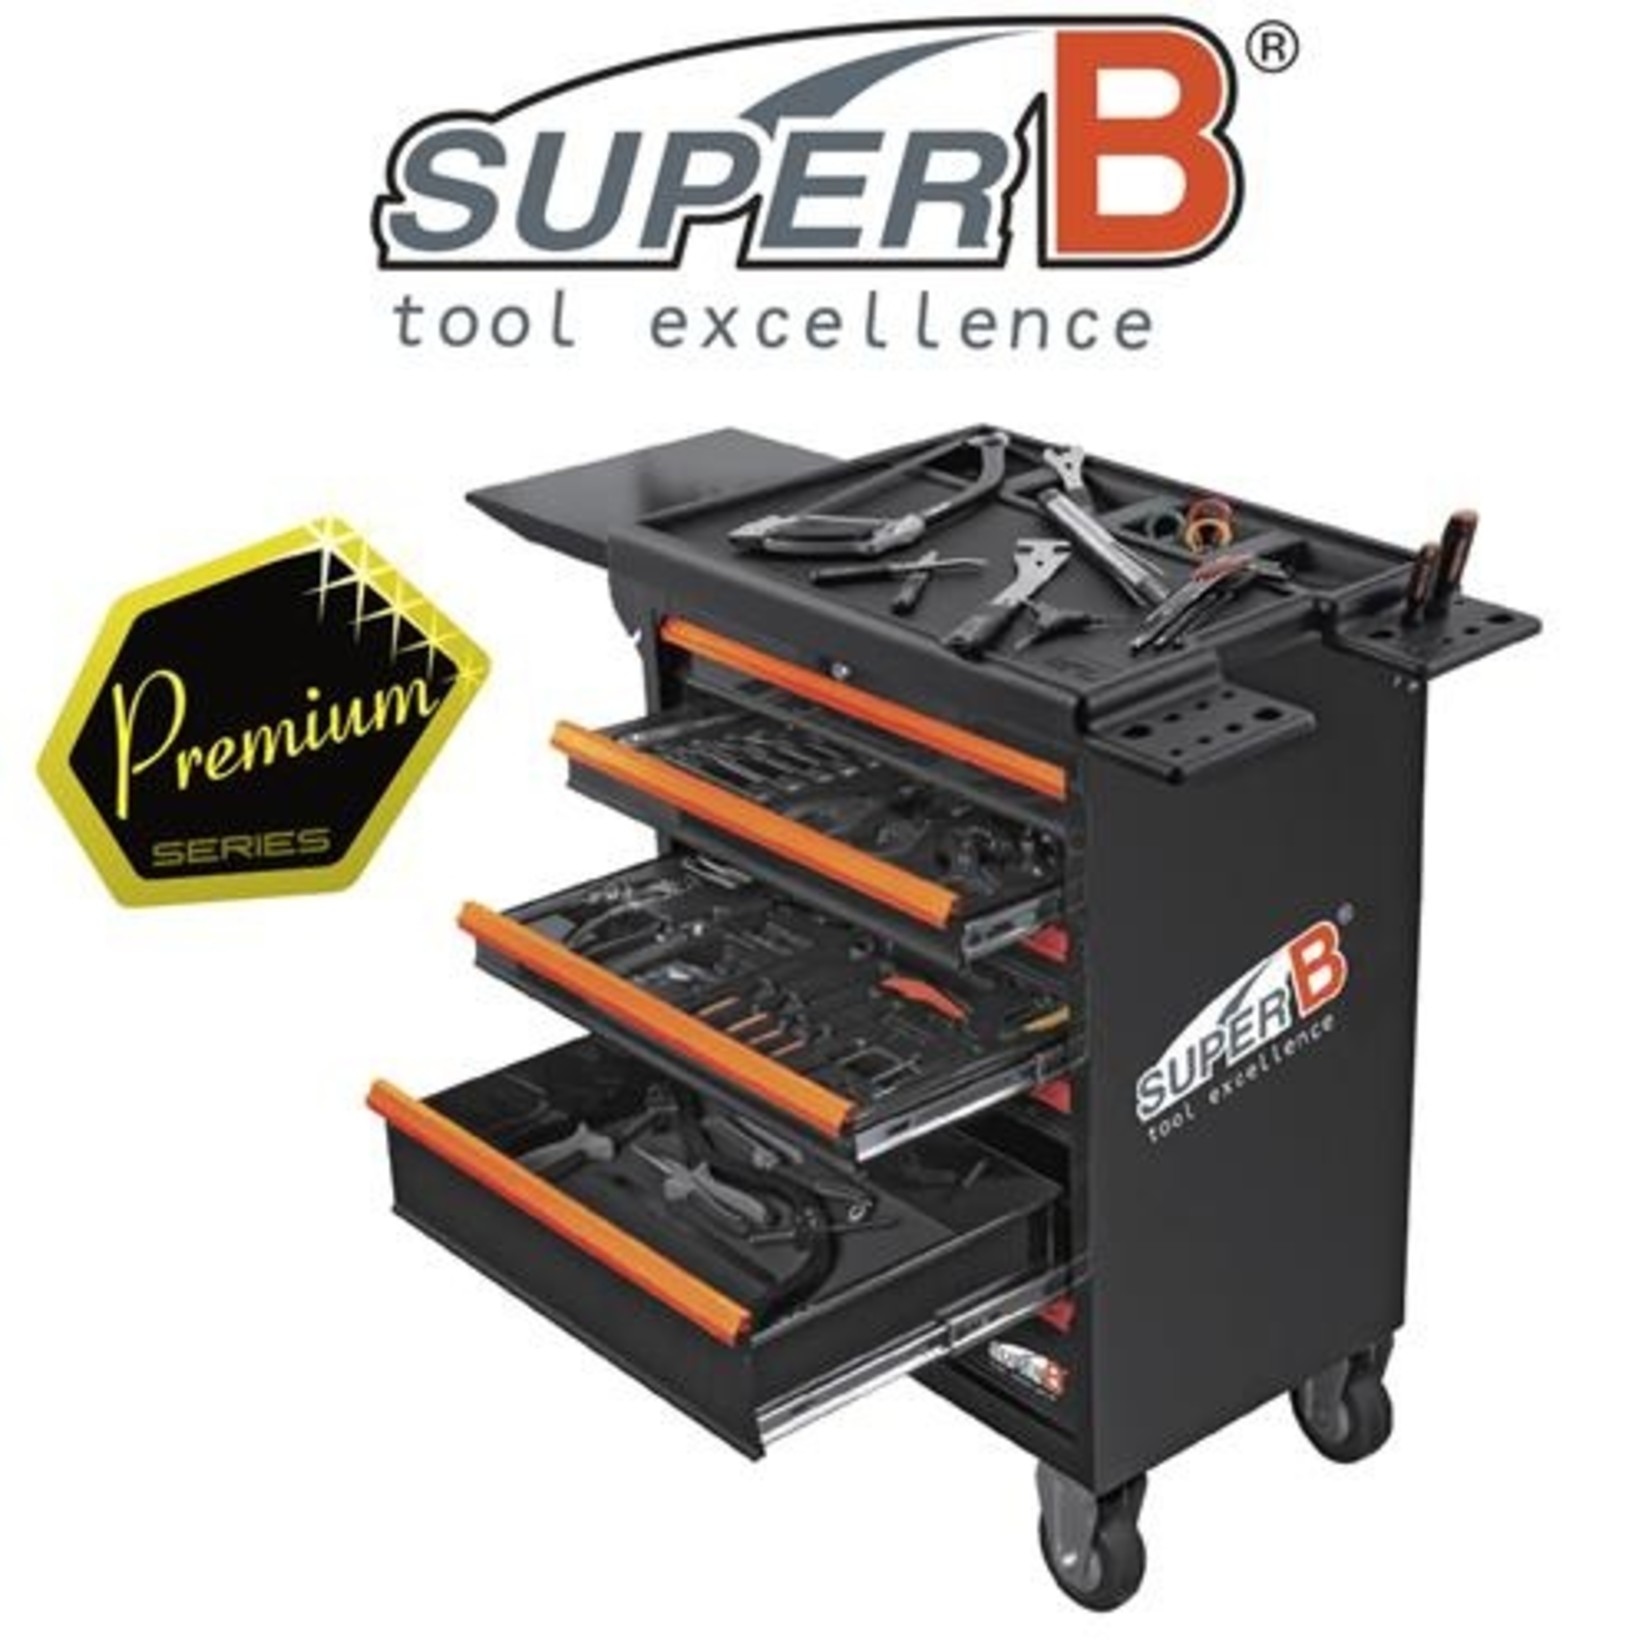 Super B SuperB Professional 104 Piece Premium Series Work Station - Bike Tool